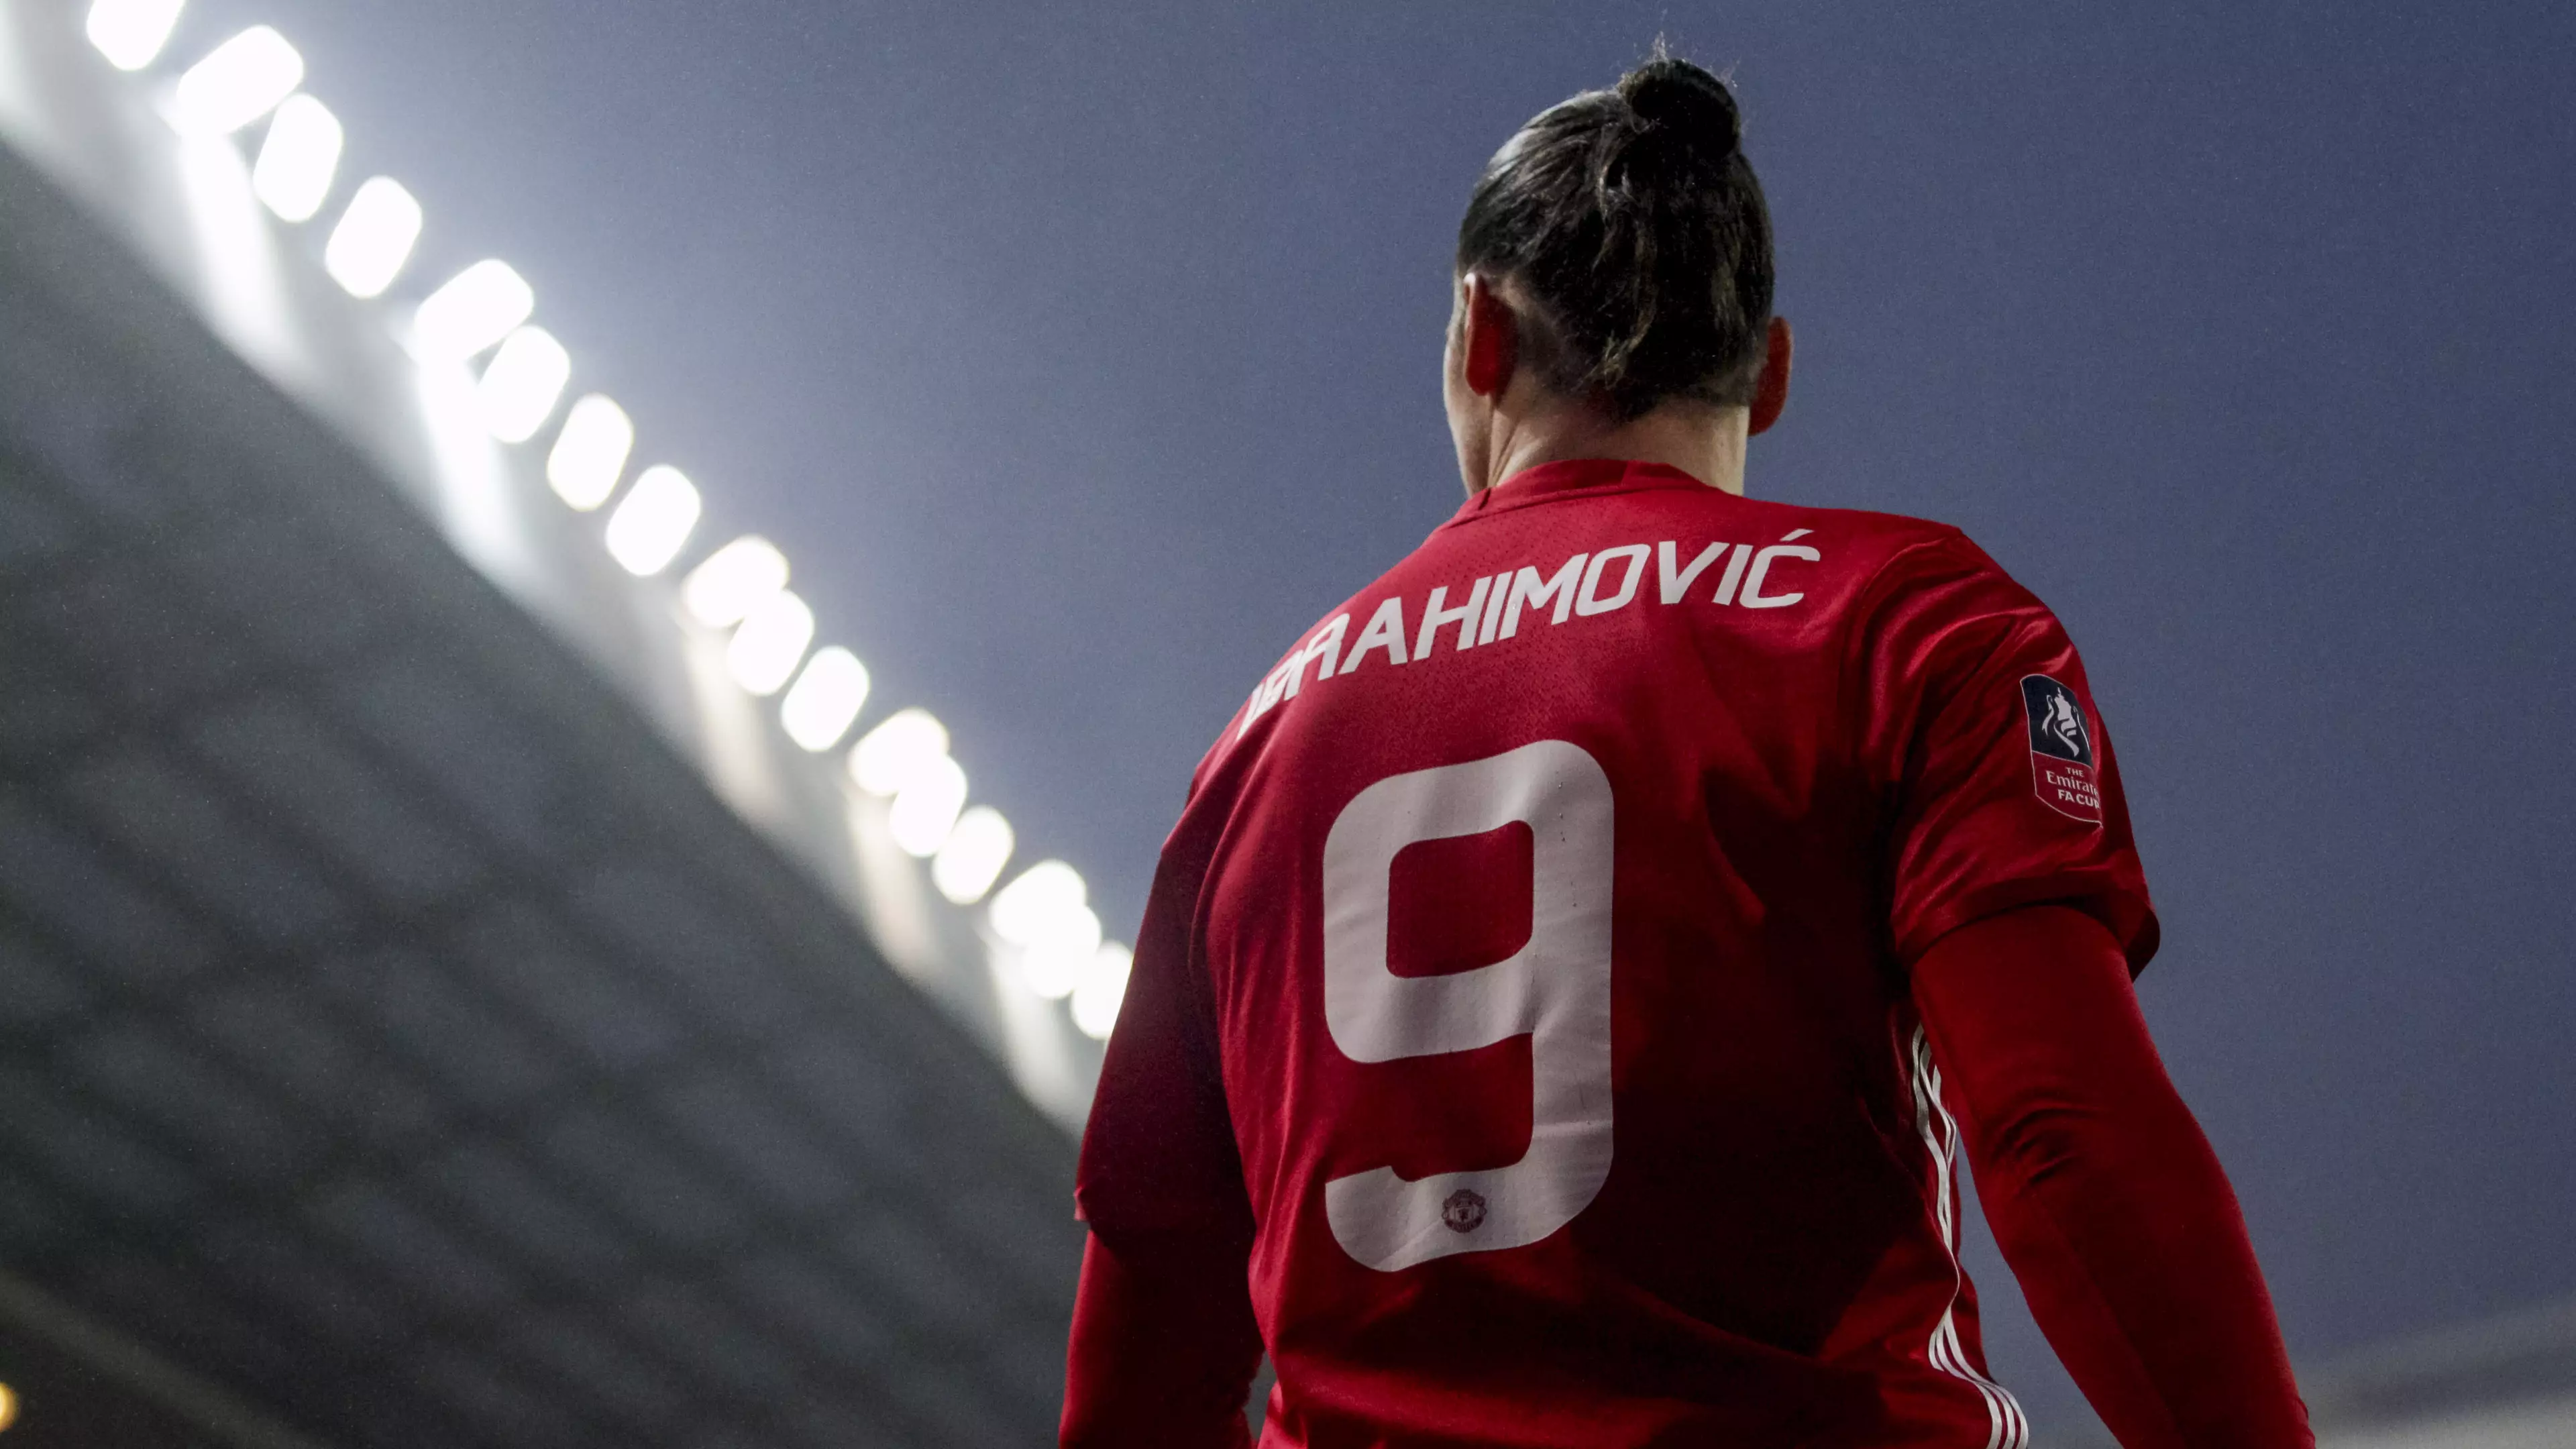 Club Want To Sign Zlatan Ibrahimovic To Create Ridiculous Strike Pairing